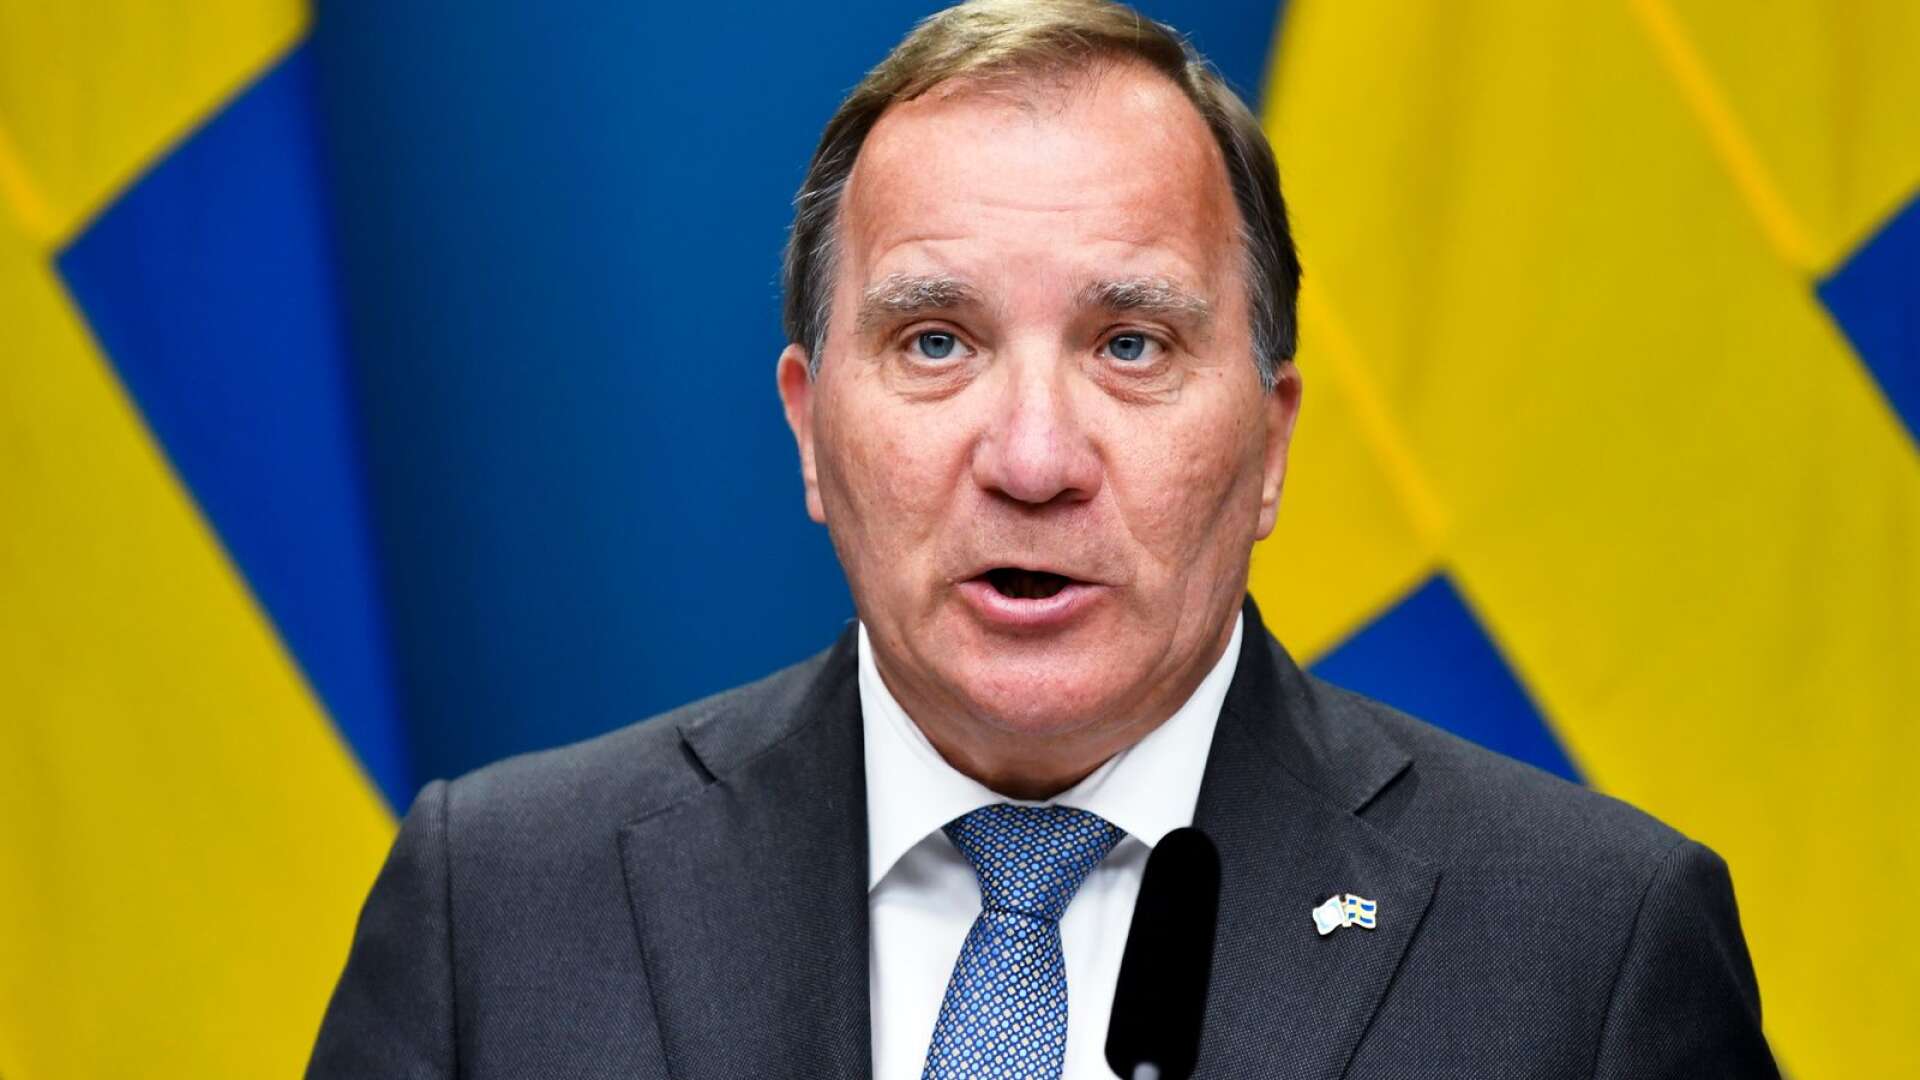 Statsminister Stefan Löfven (S)